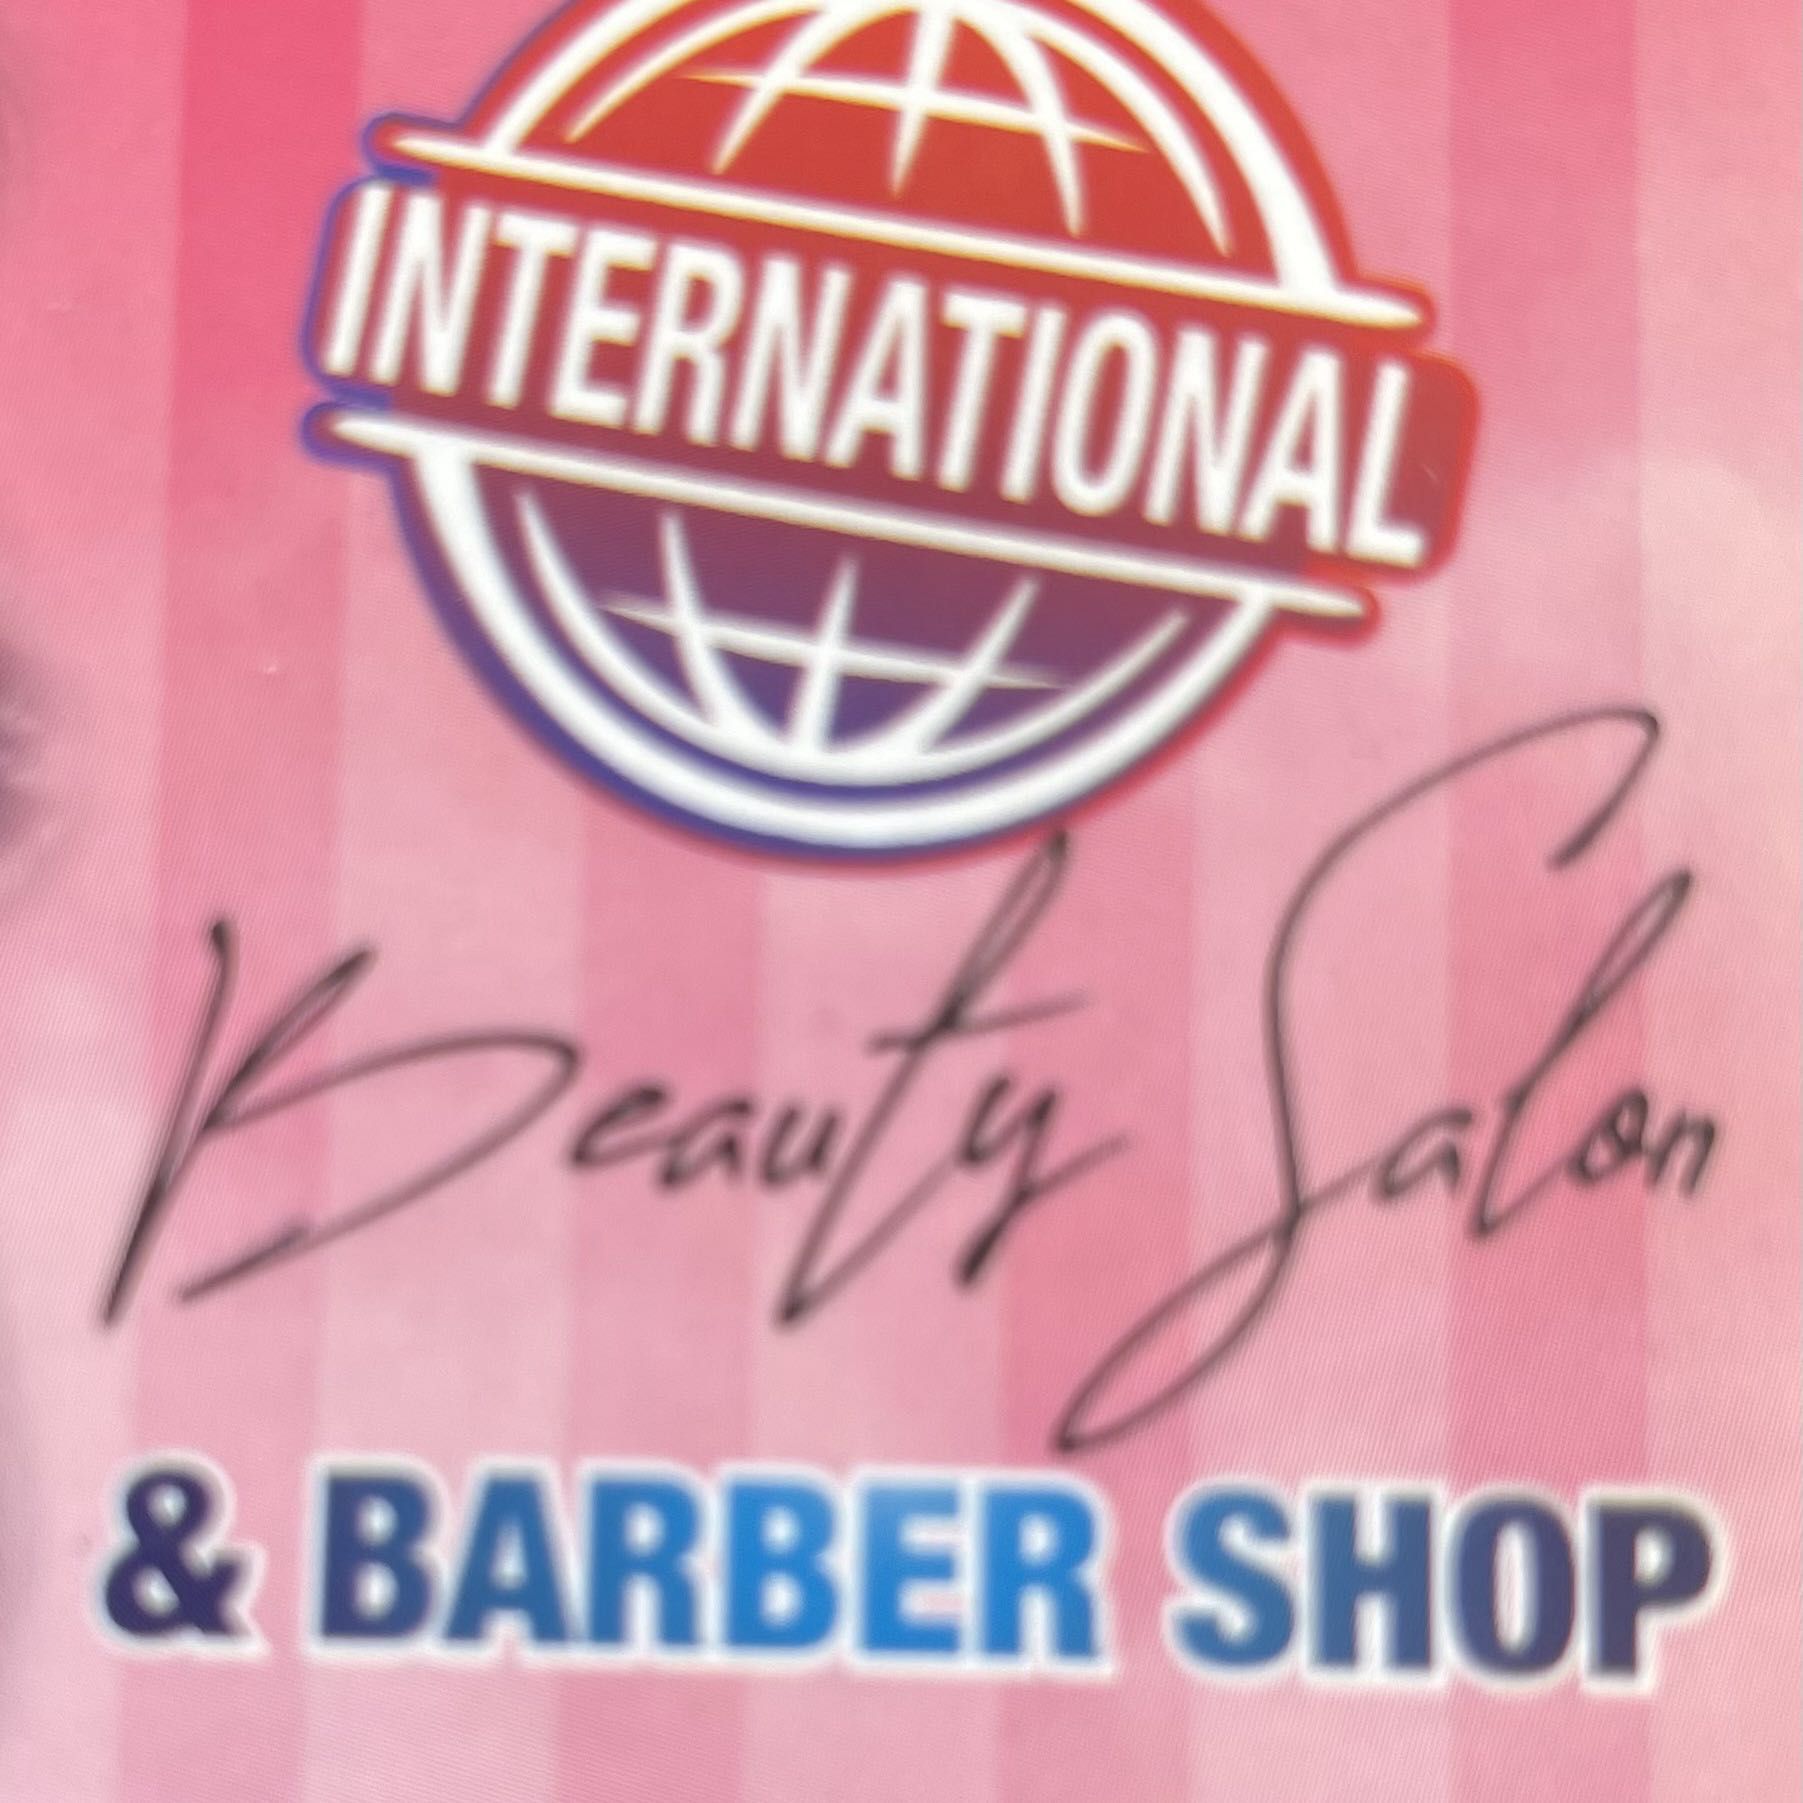 International Beauty Salon & Barbershop, 871 E 241st St, Bronx, 10466